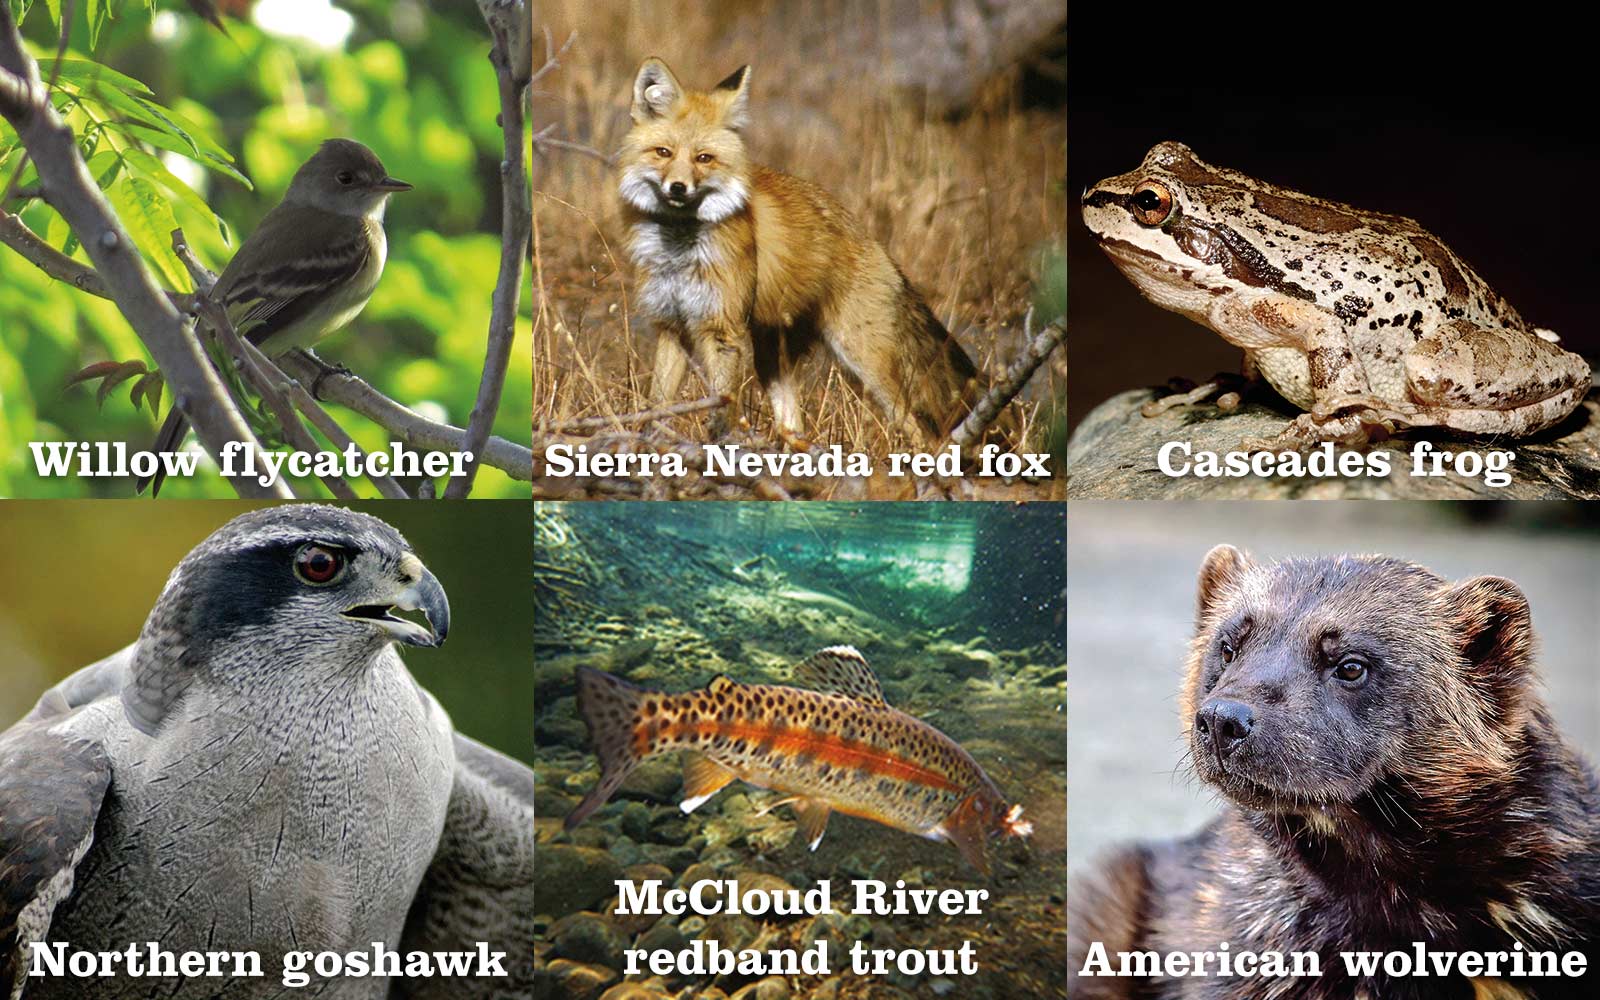 Willow flycatcher, Sierra Nevada red fox, Cascades frog, Northern goshawk, McCloud River redband trout, American wolverine